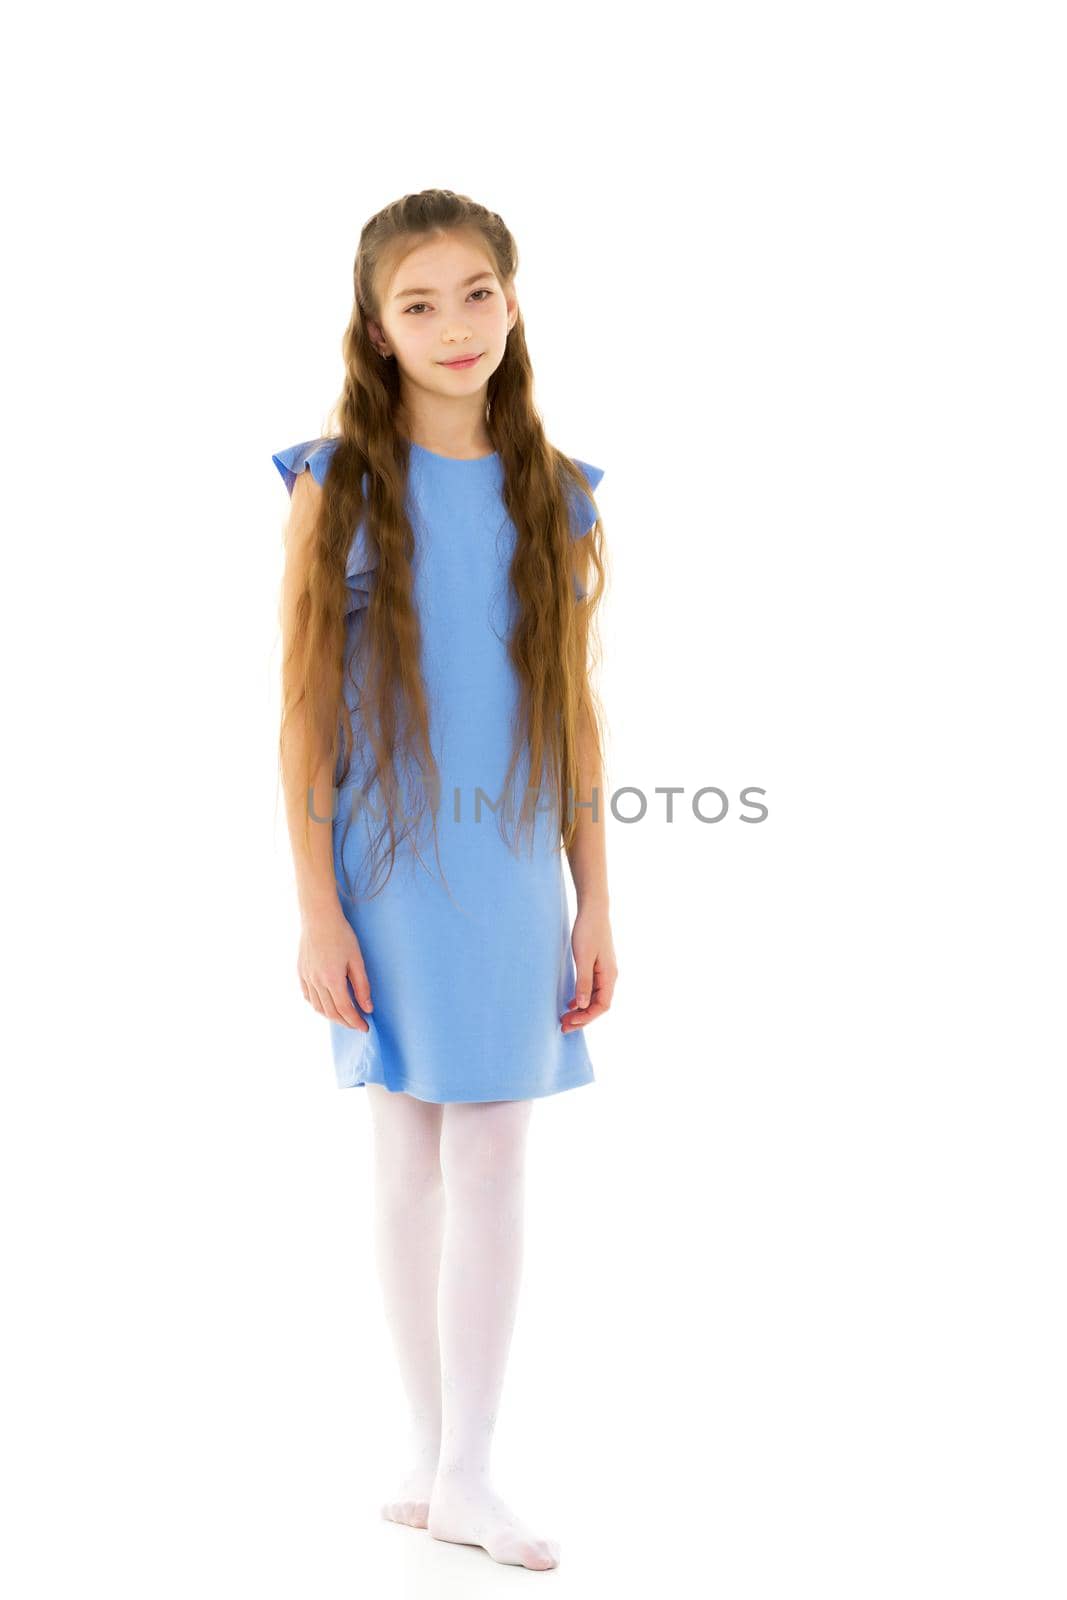 Little girl in an elegant dress.The concept of a happy childhood by kolesnikov_studio